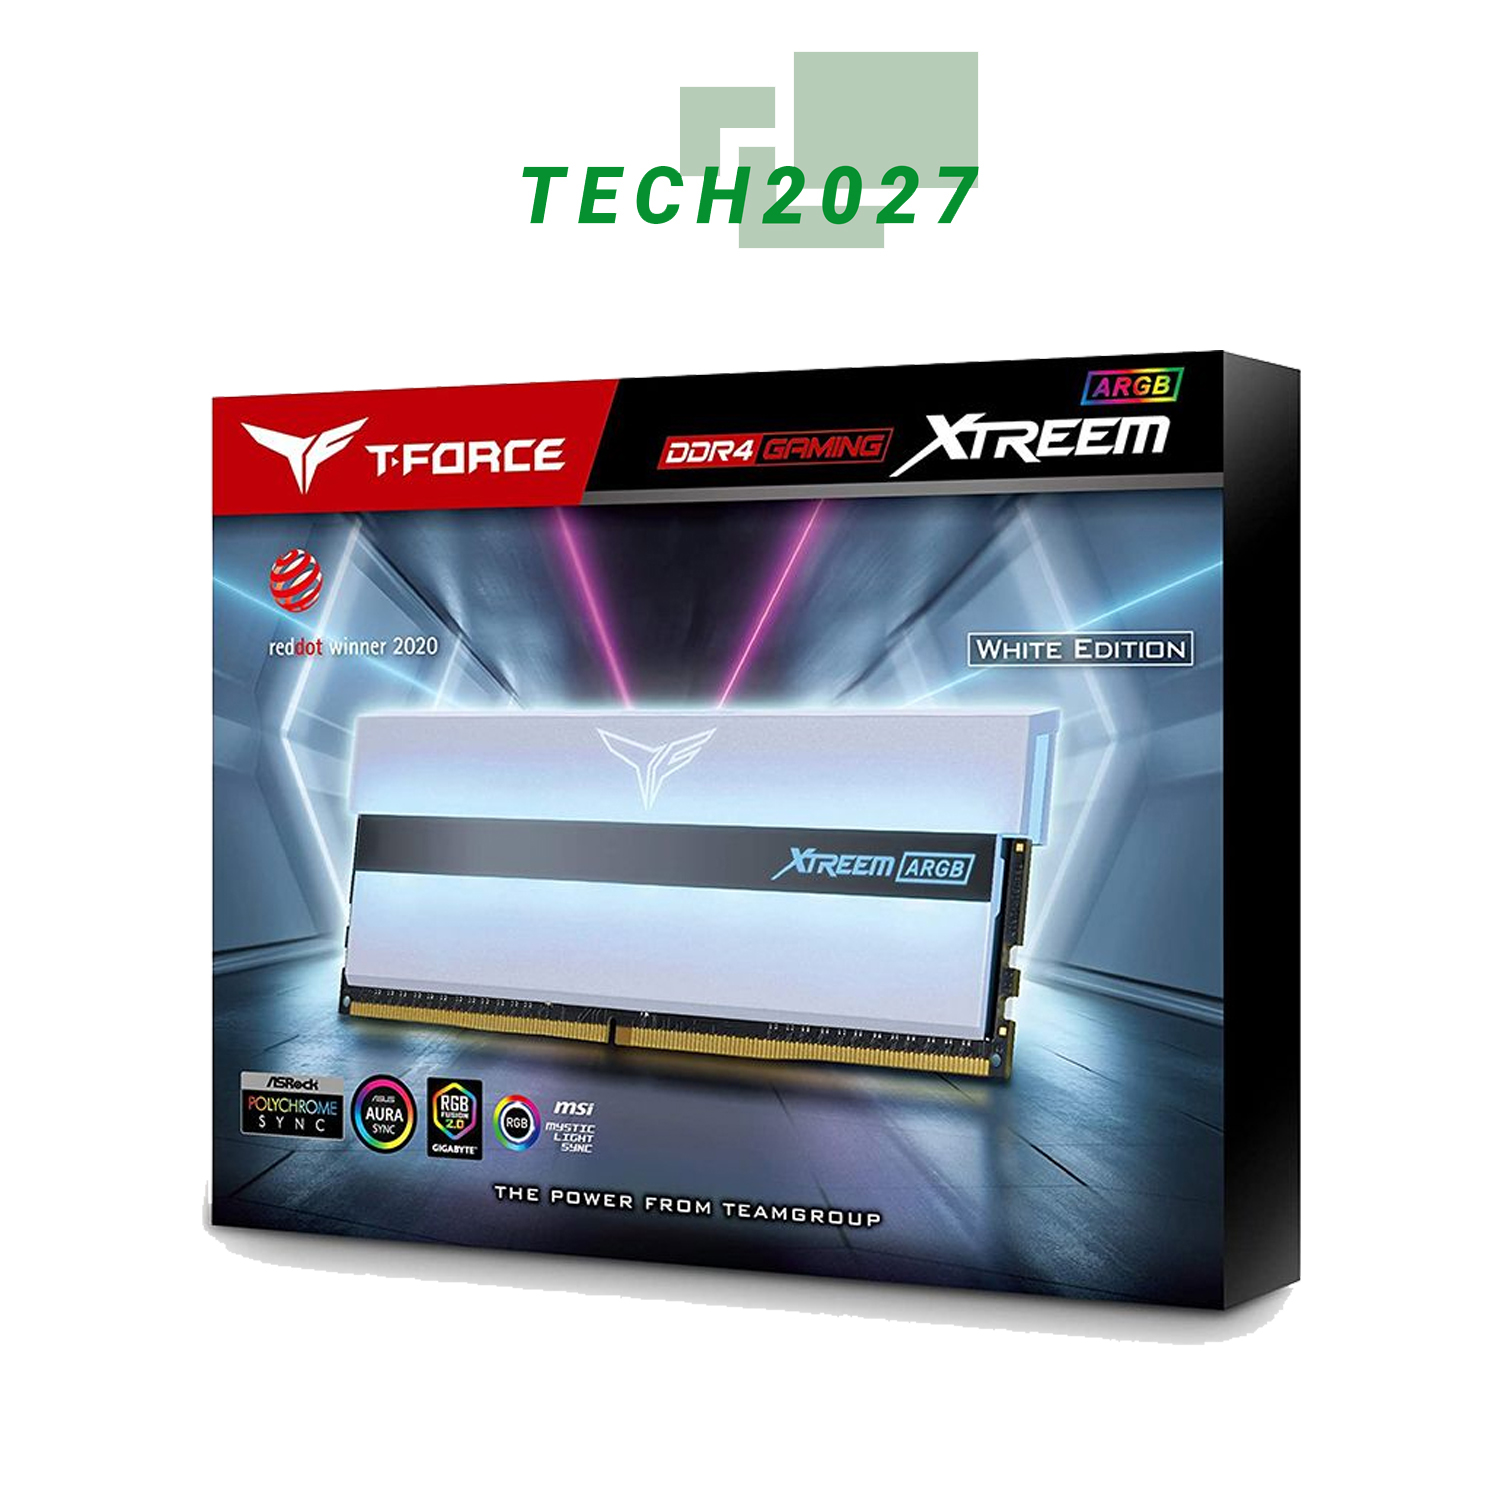 DDR4-5333 16GB 8GB×2 T-FORCE XTREEM RGB